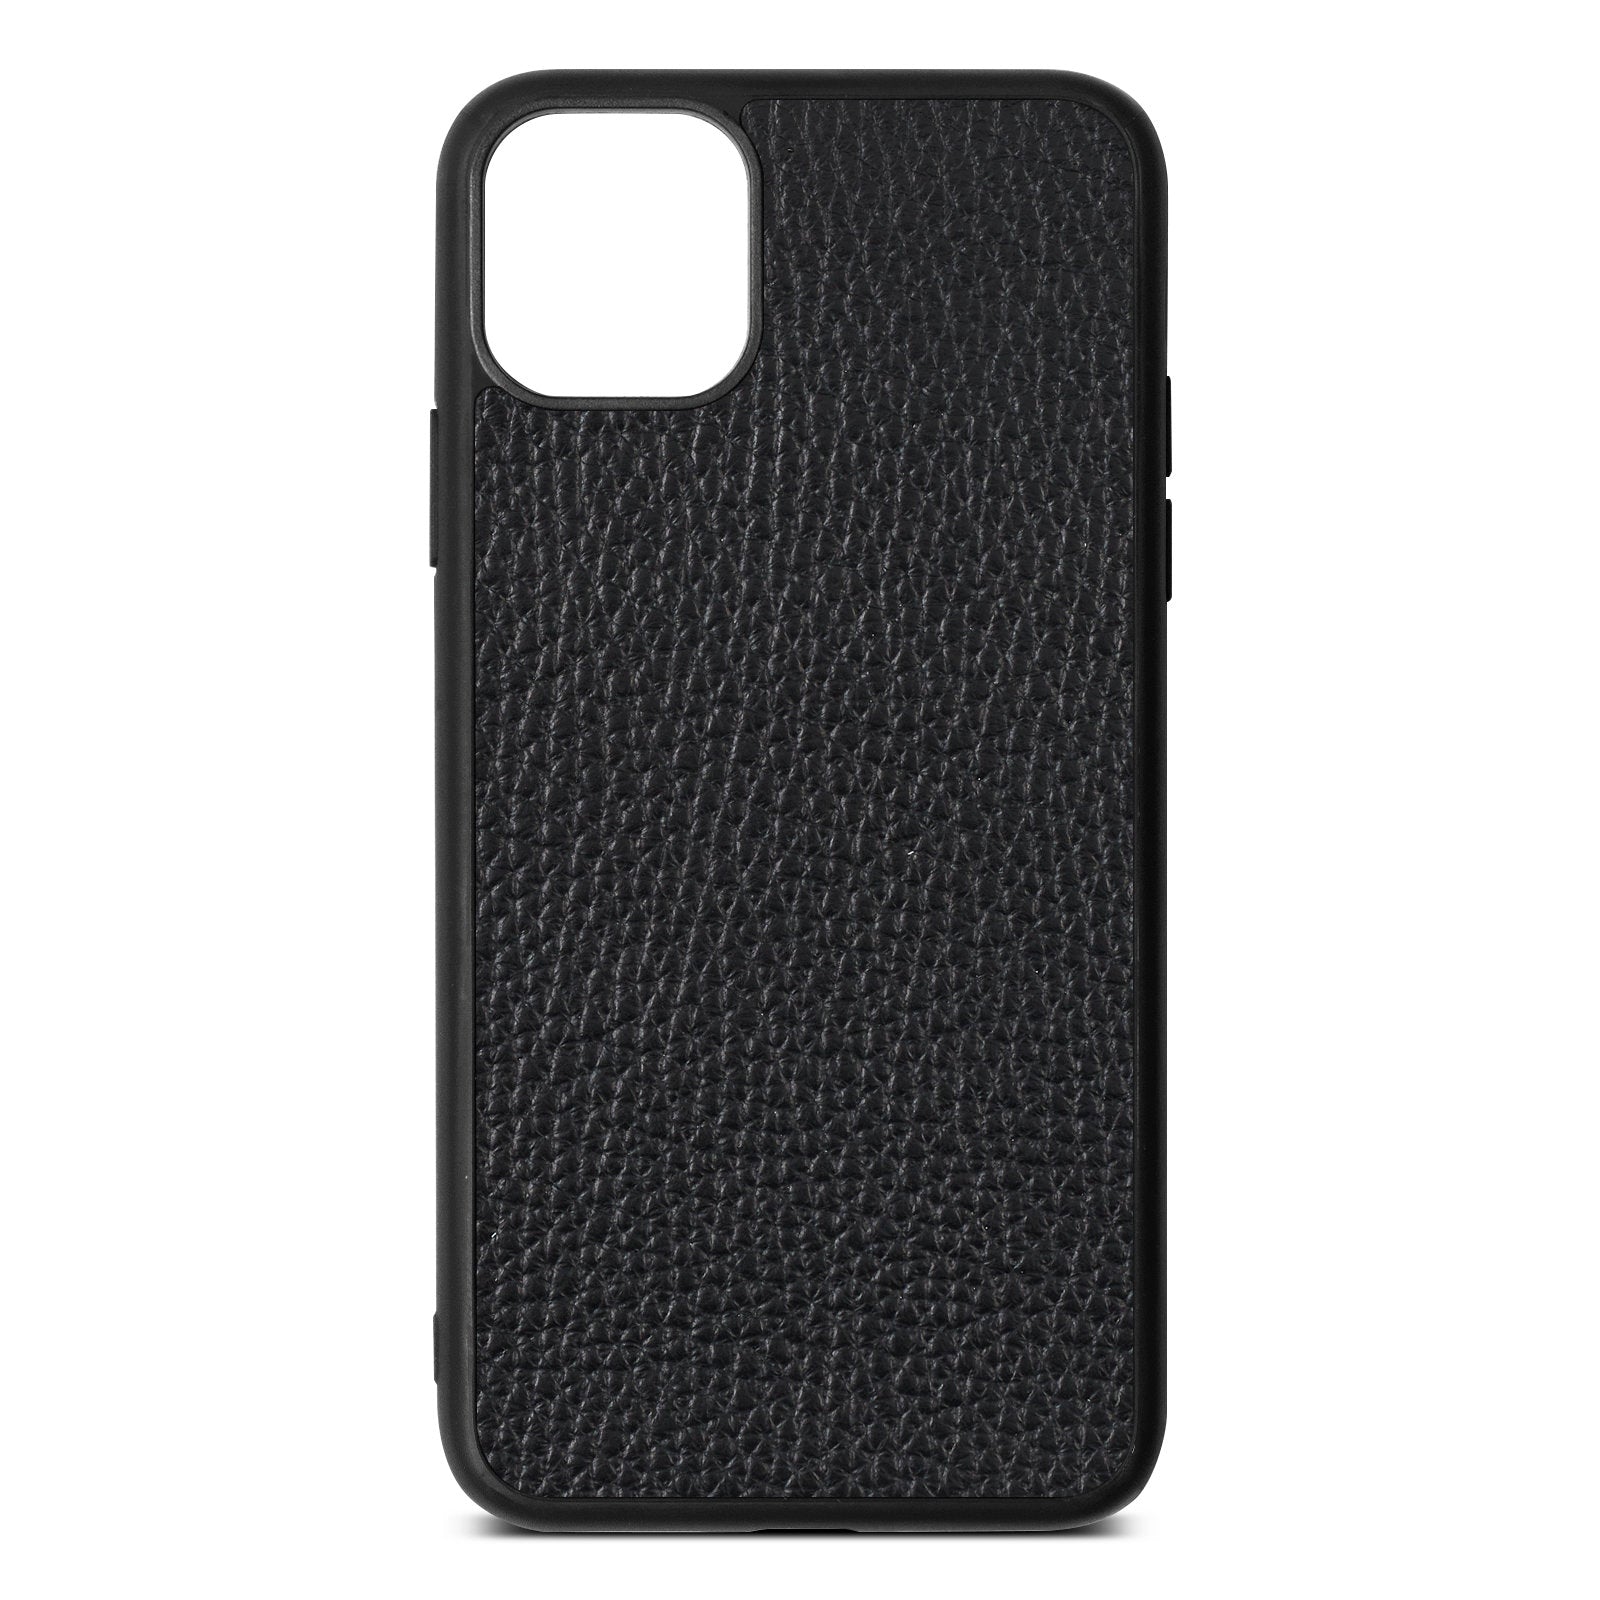 Blank iPhone 11 Pro Max Pebble Leather Black